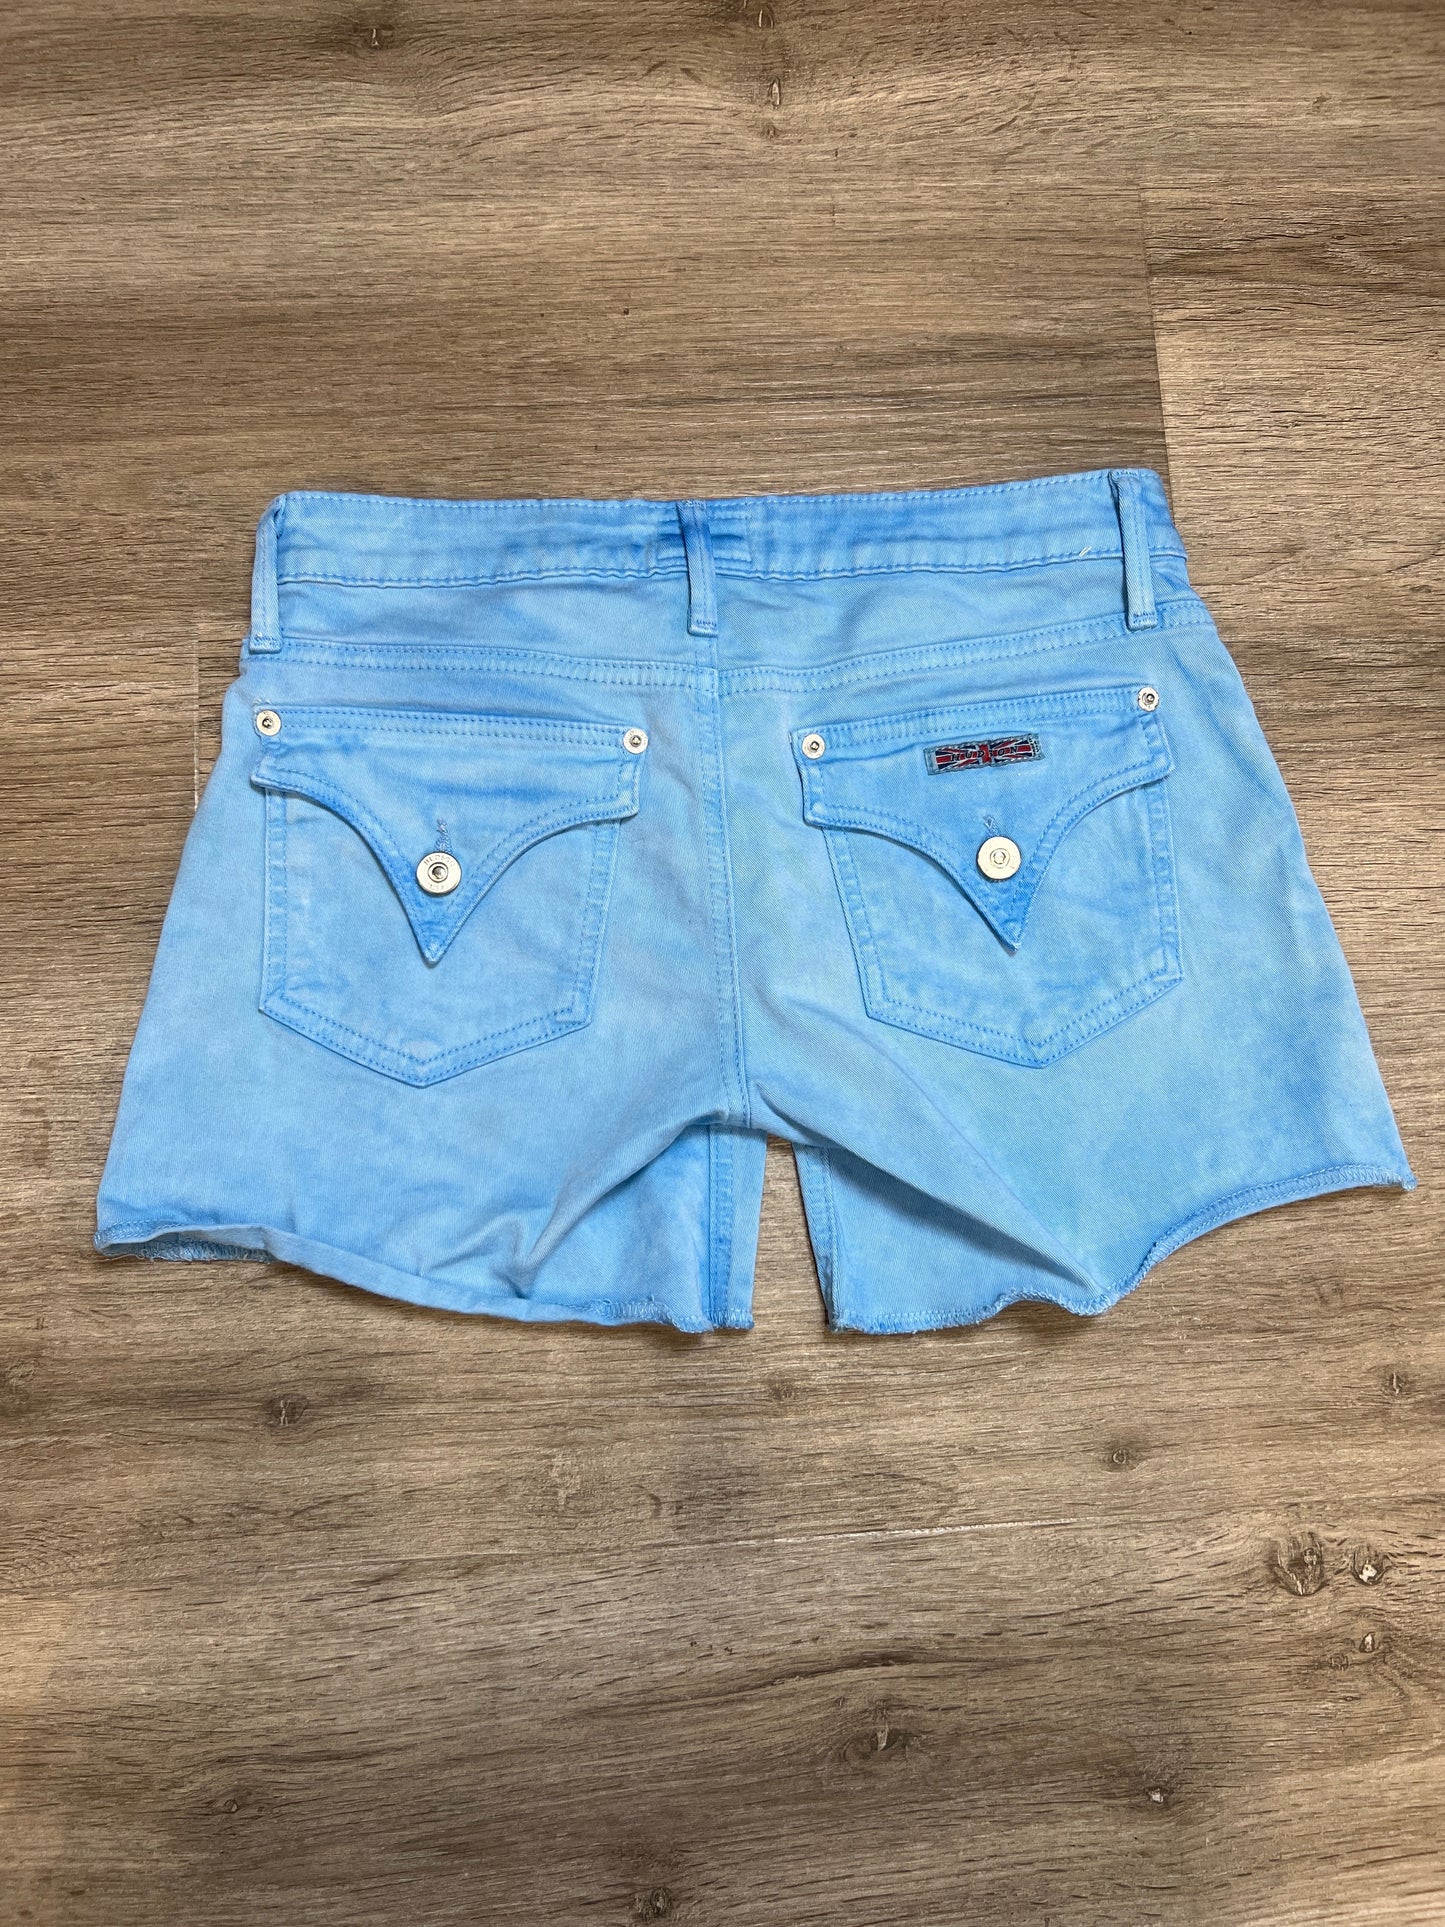 Shorts By Hudson  Size: S